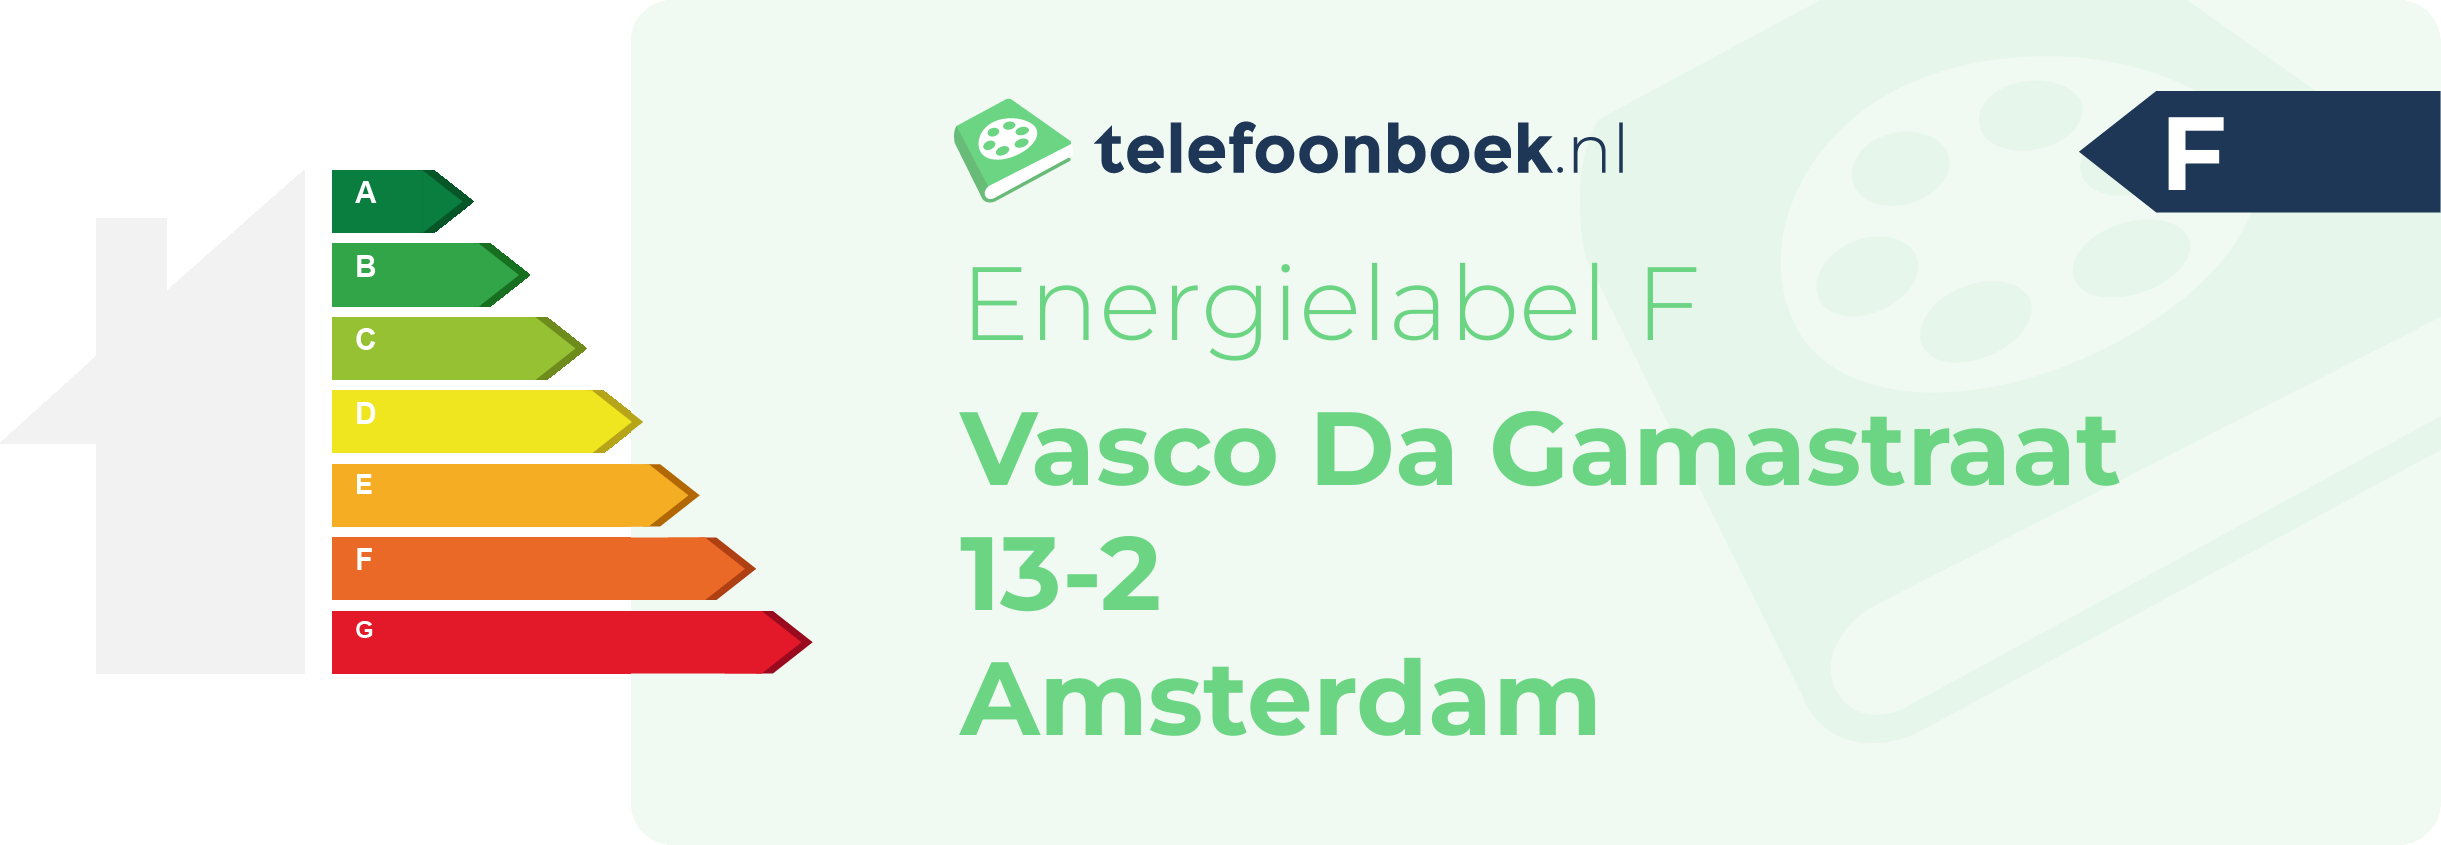 Energielabel Vasco Da Gamastraat 13-2 Amsterdam